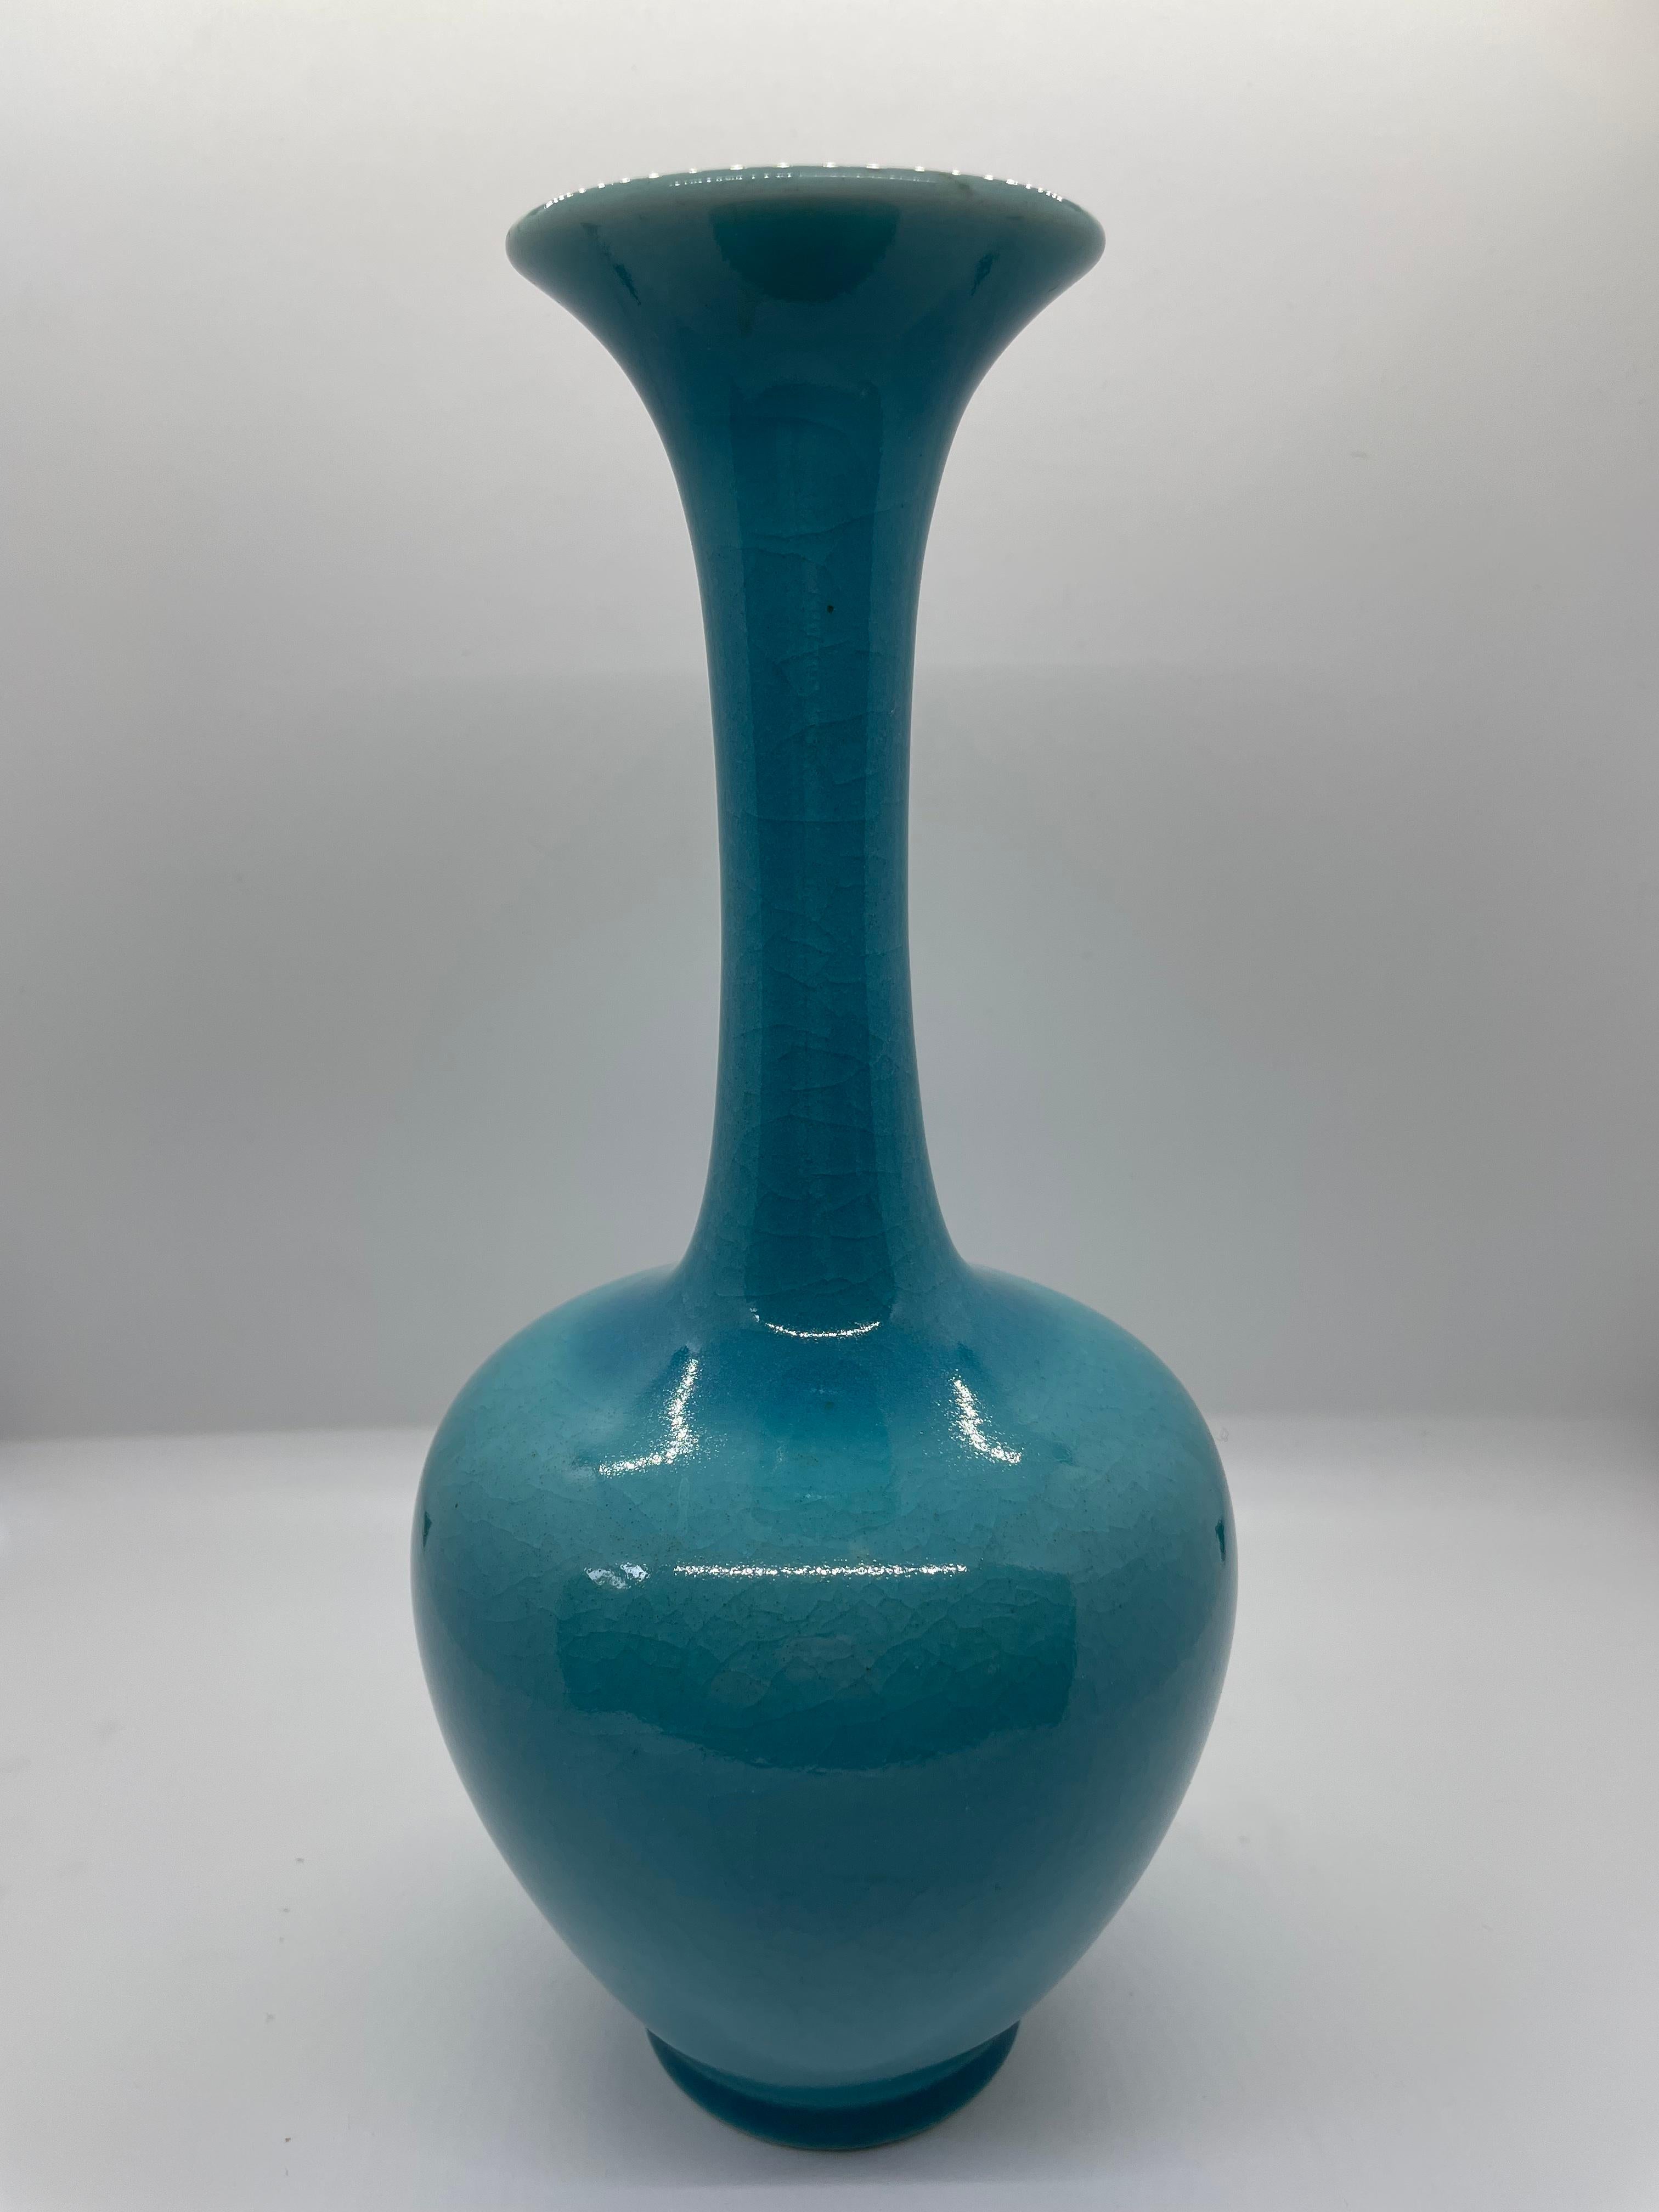 American Craftsman Rookwood Pottery Bud Vase 1942 in Sky Blue